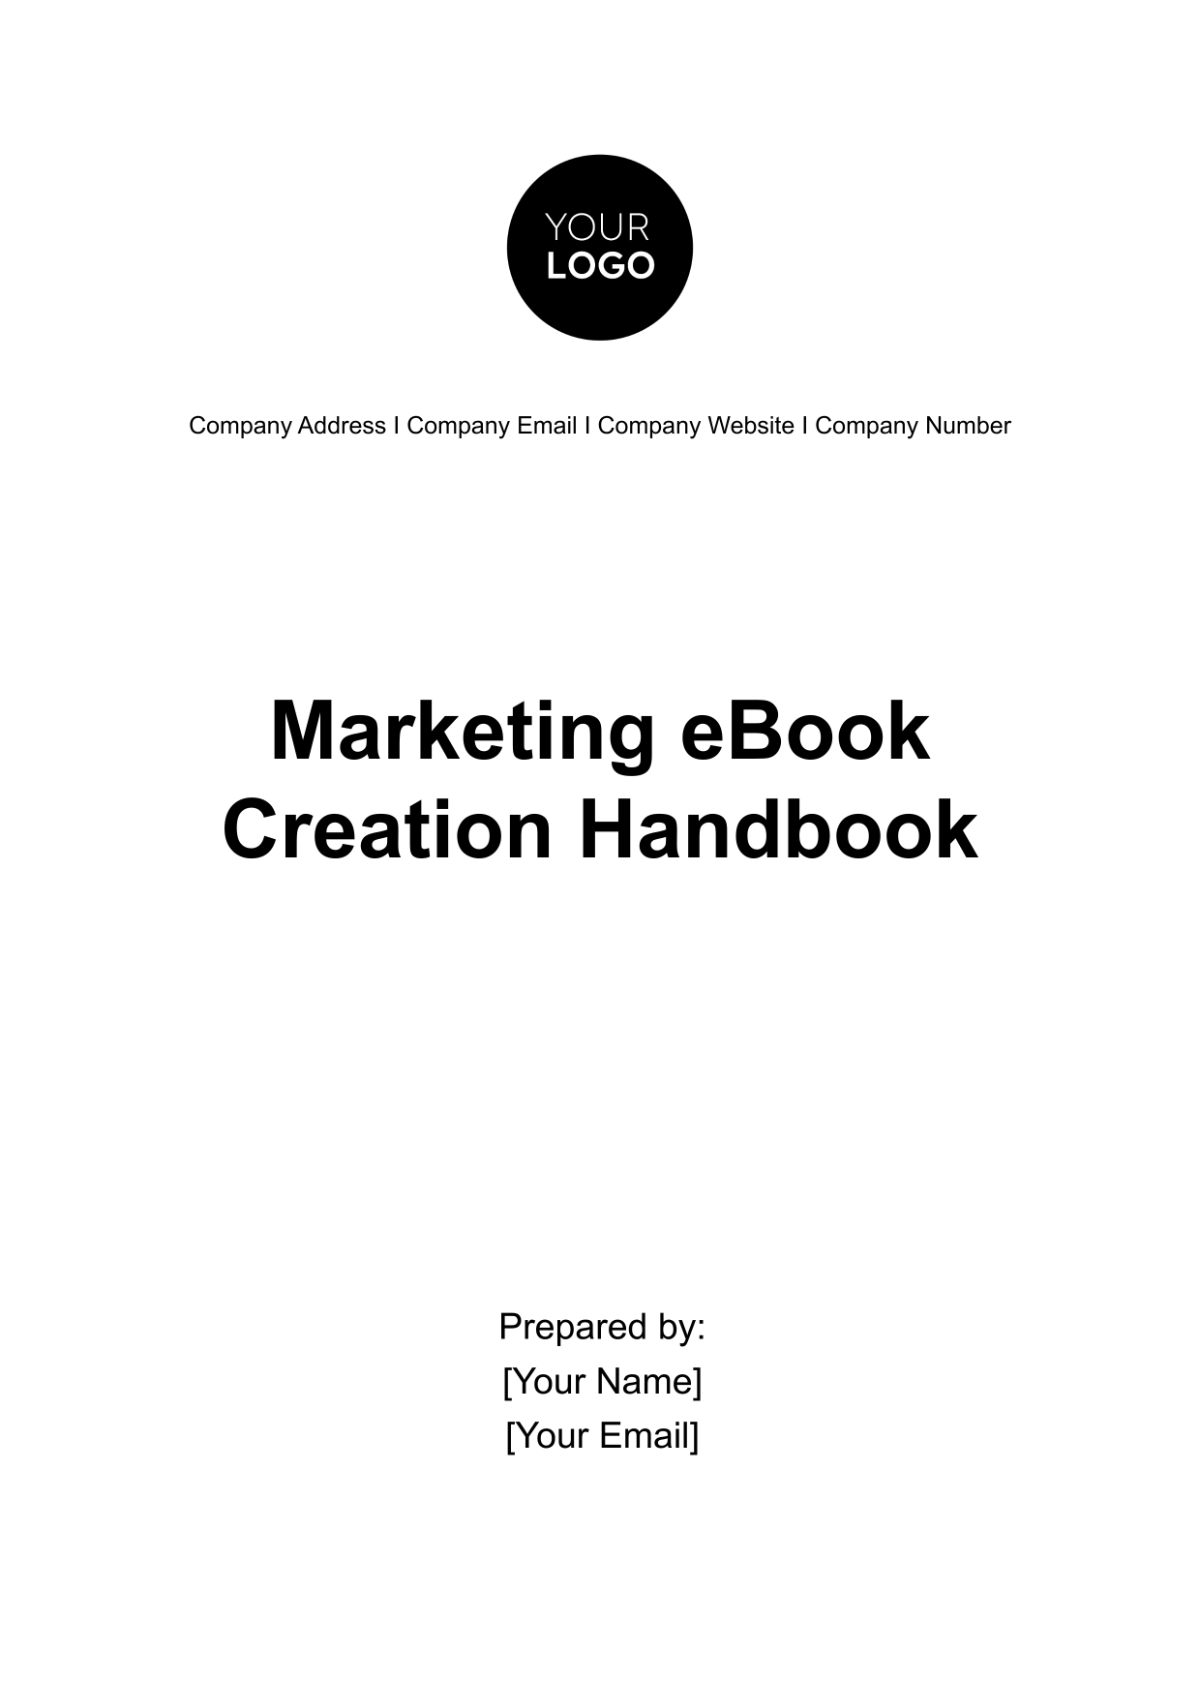 Free Marketing eBook Creation Handbook Template